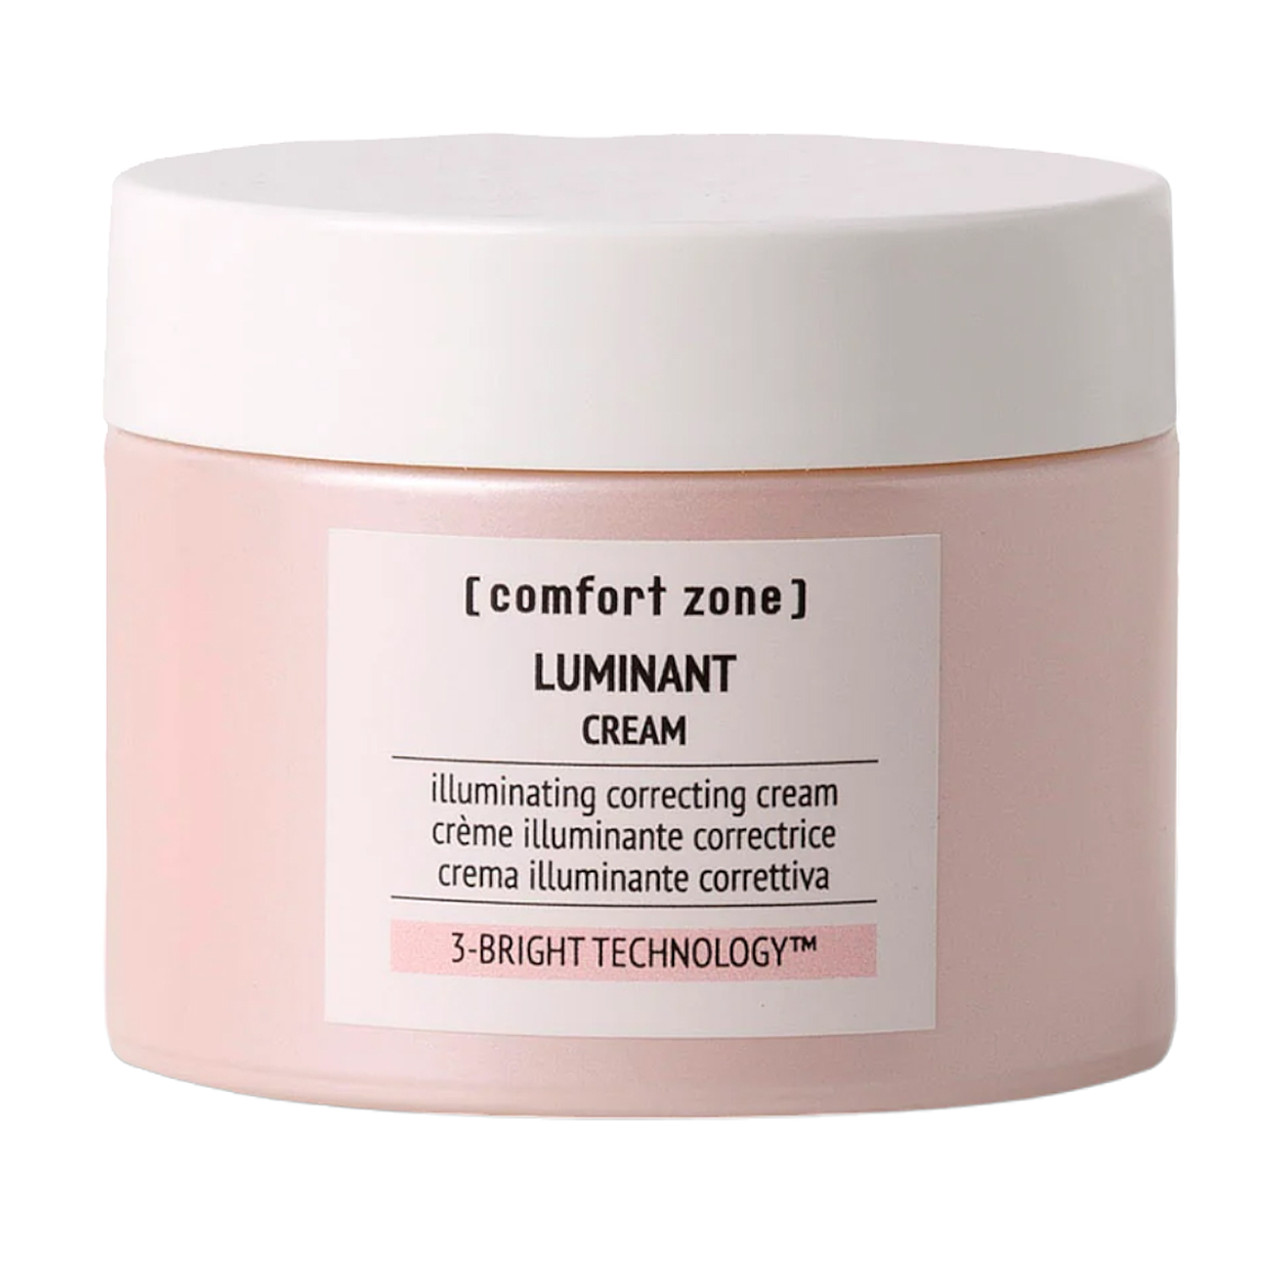 Comfort Zone Luminant Cream - 2 oz 